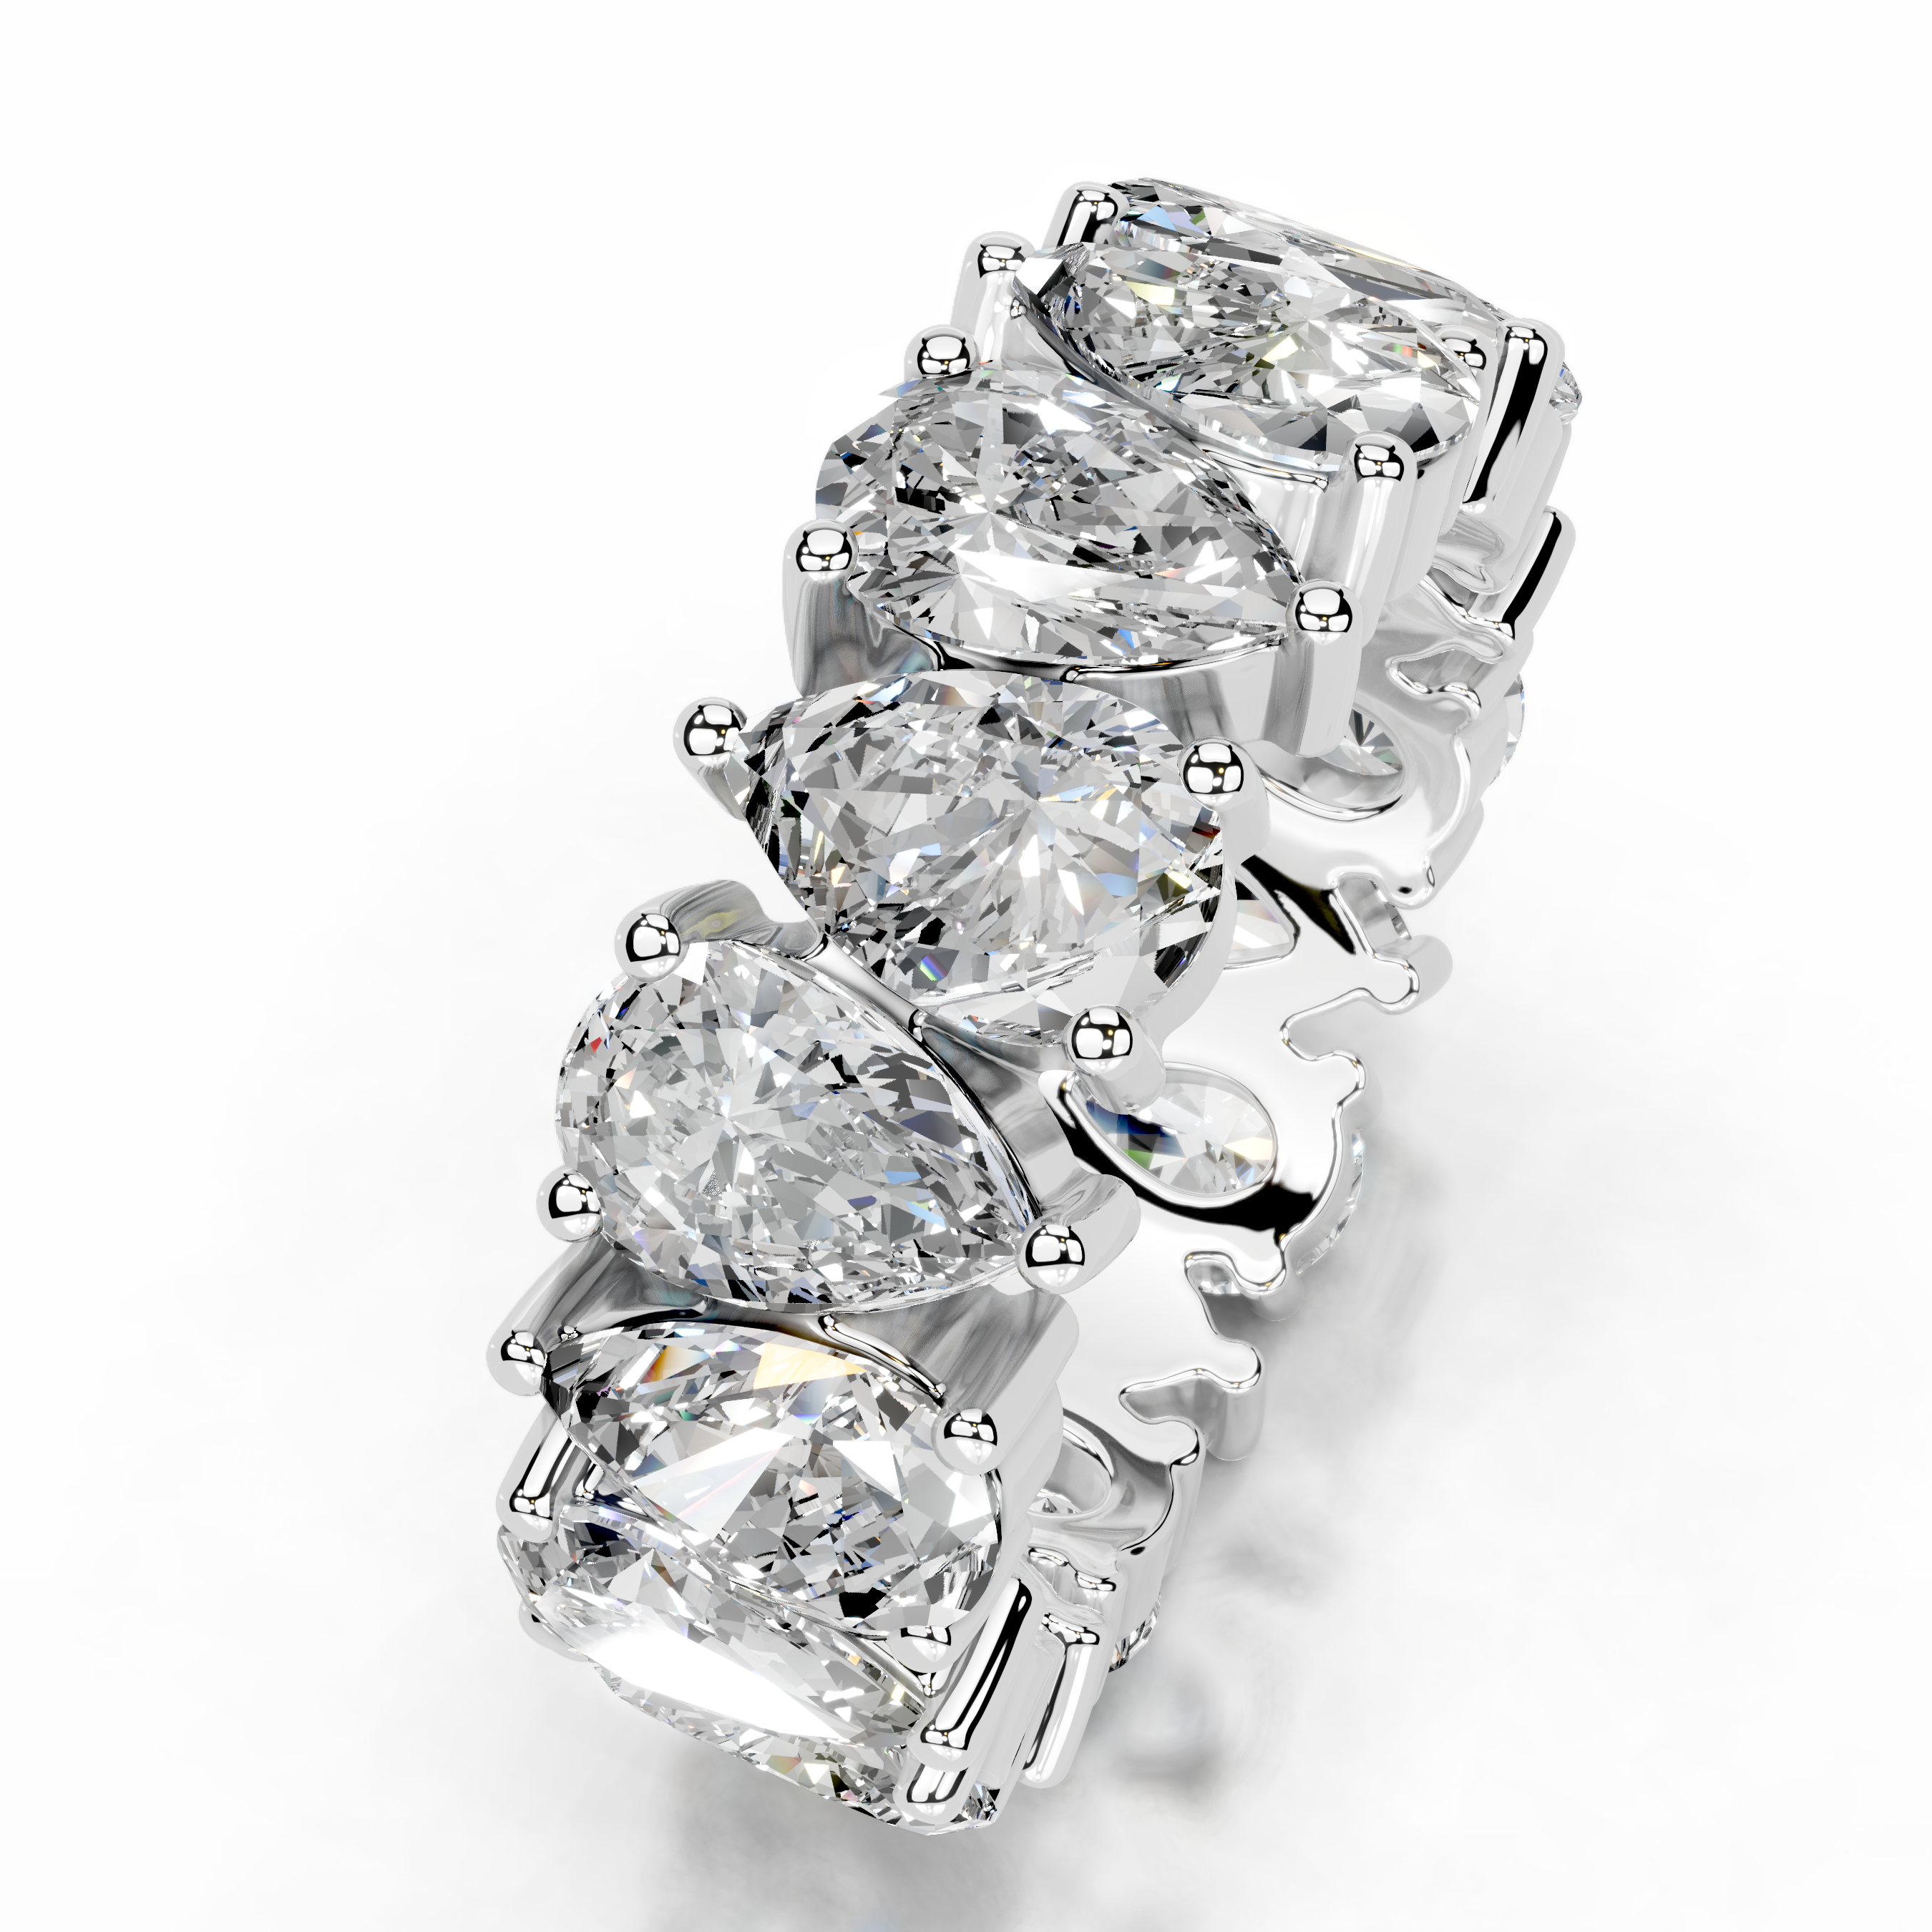 Sarah Diamond Wedding Ring   (6 Carat) -Platinum